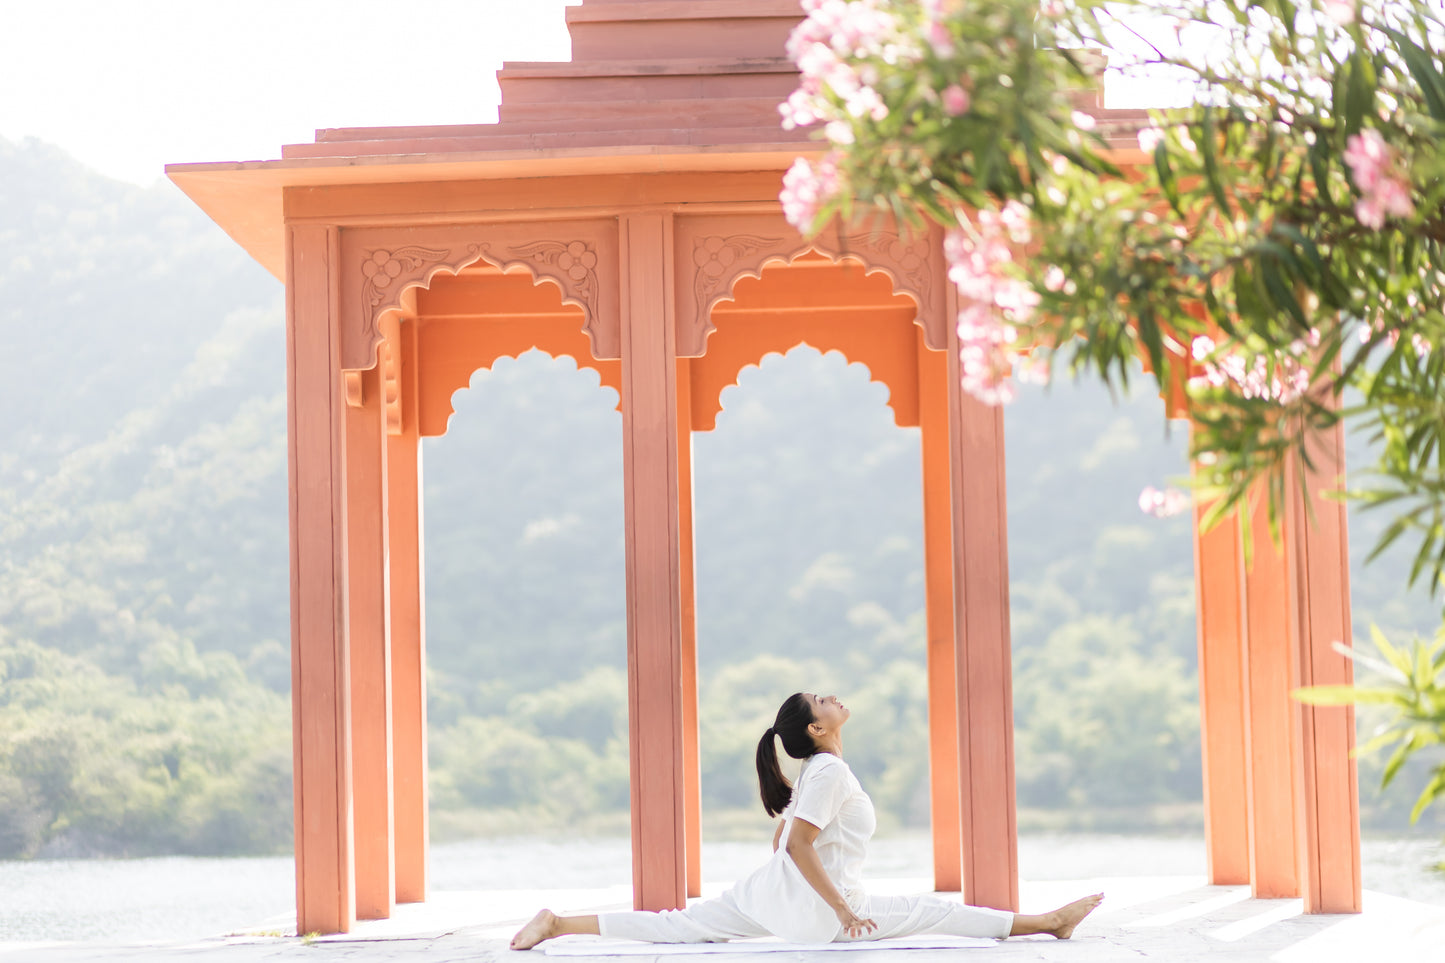 "Kosmoh 100% Organic KHADI Yoga Coord Set - Serene White ( Set of top & yoga pants ) - Female "